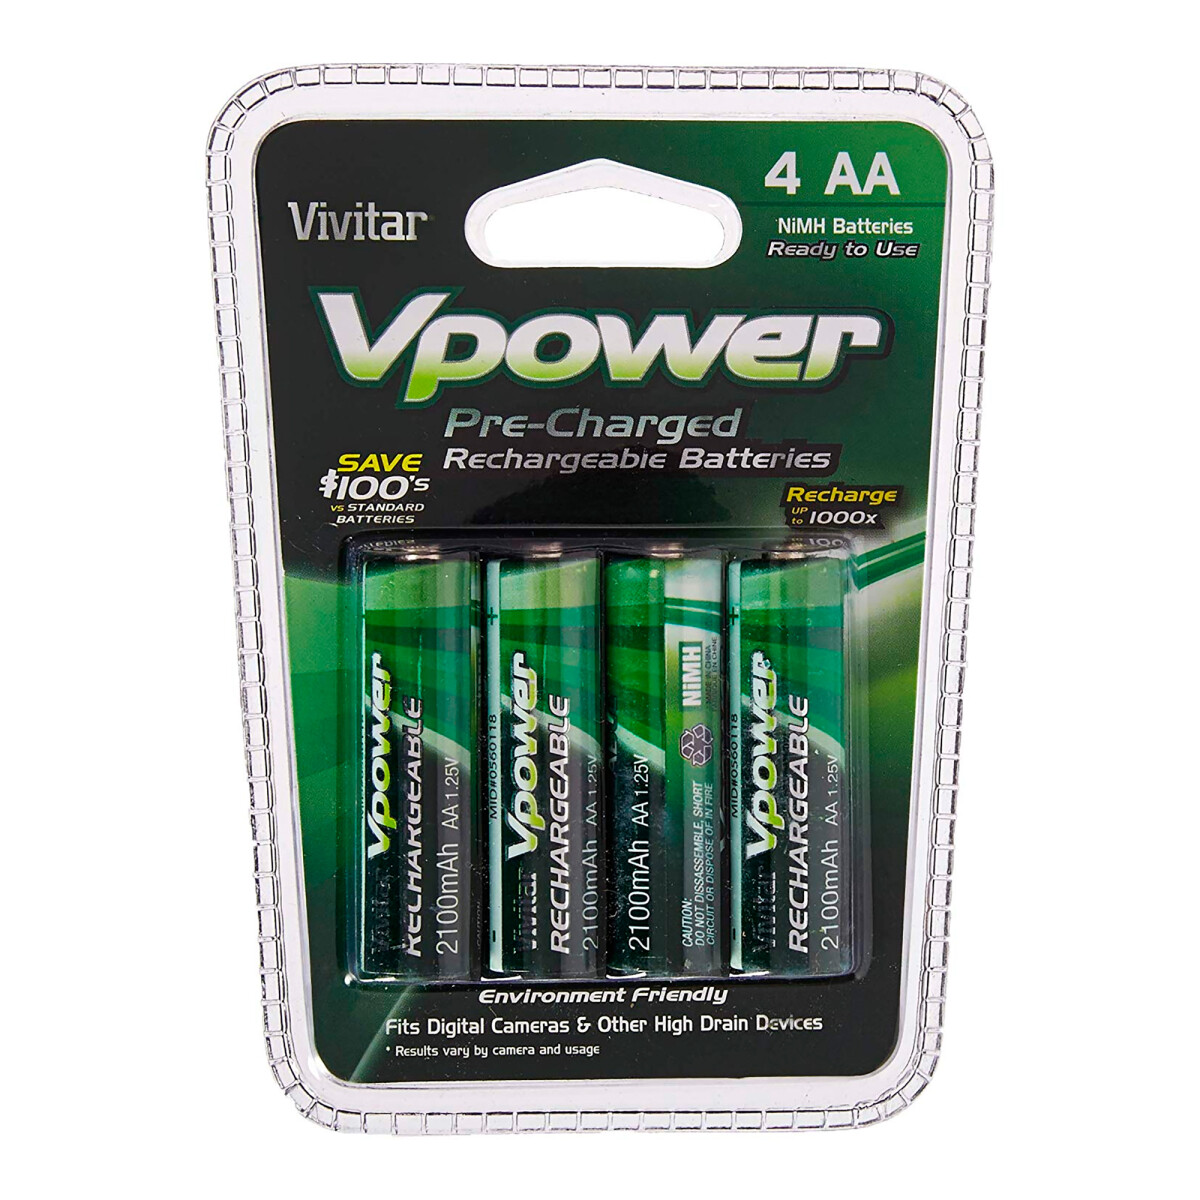 Vivitar - Bateríass Aa Recargables Vpower P4AA-2100 - 2100MAH. Nimh. Pack: 2100MAH Aa 1,25V X 4. - 001 